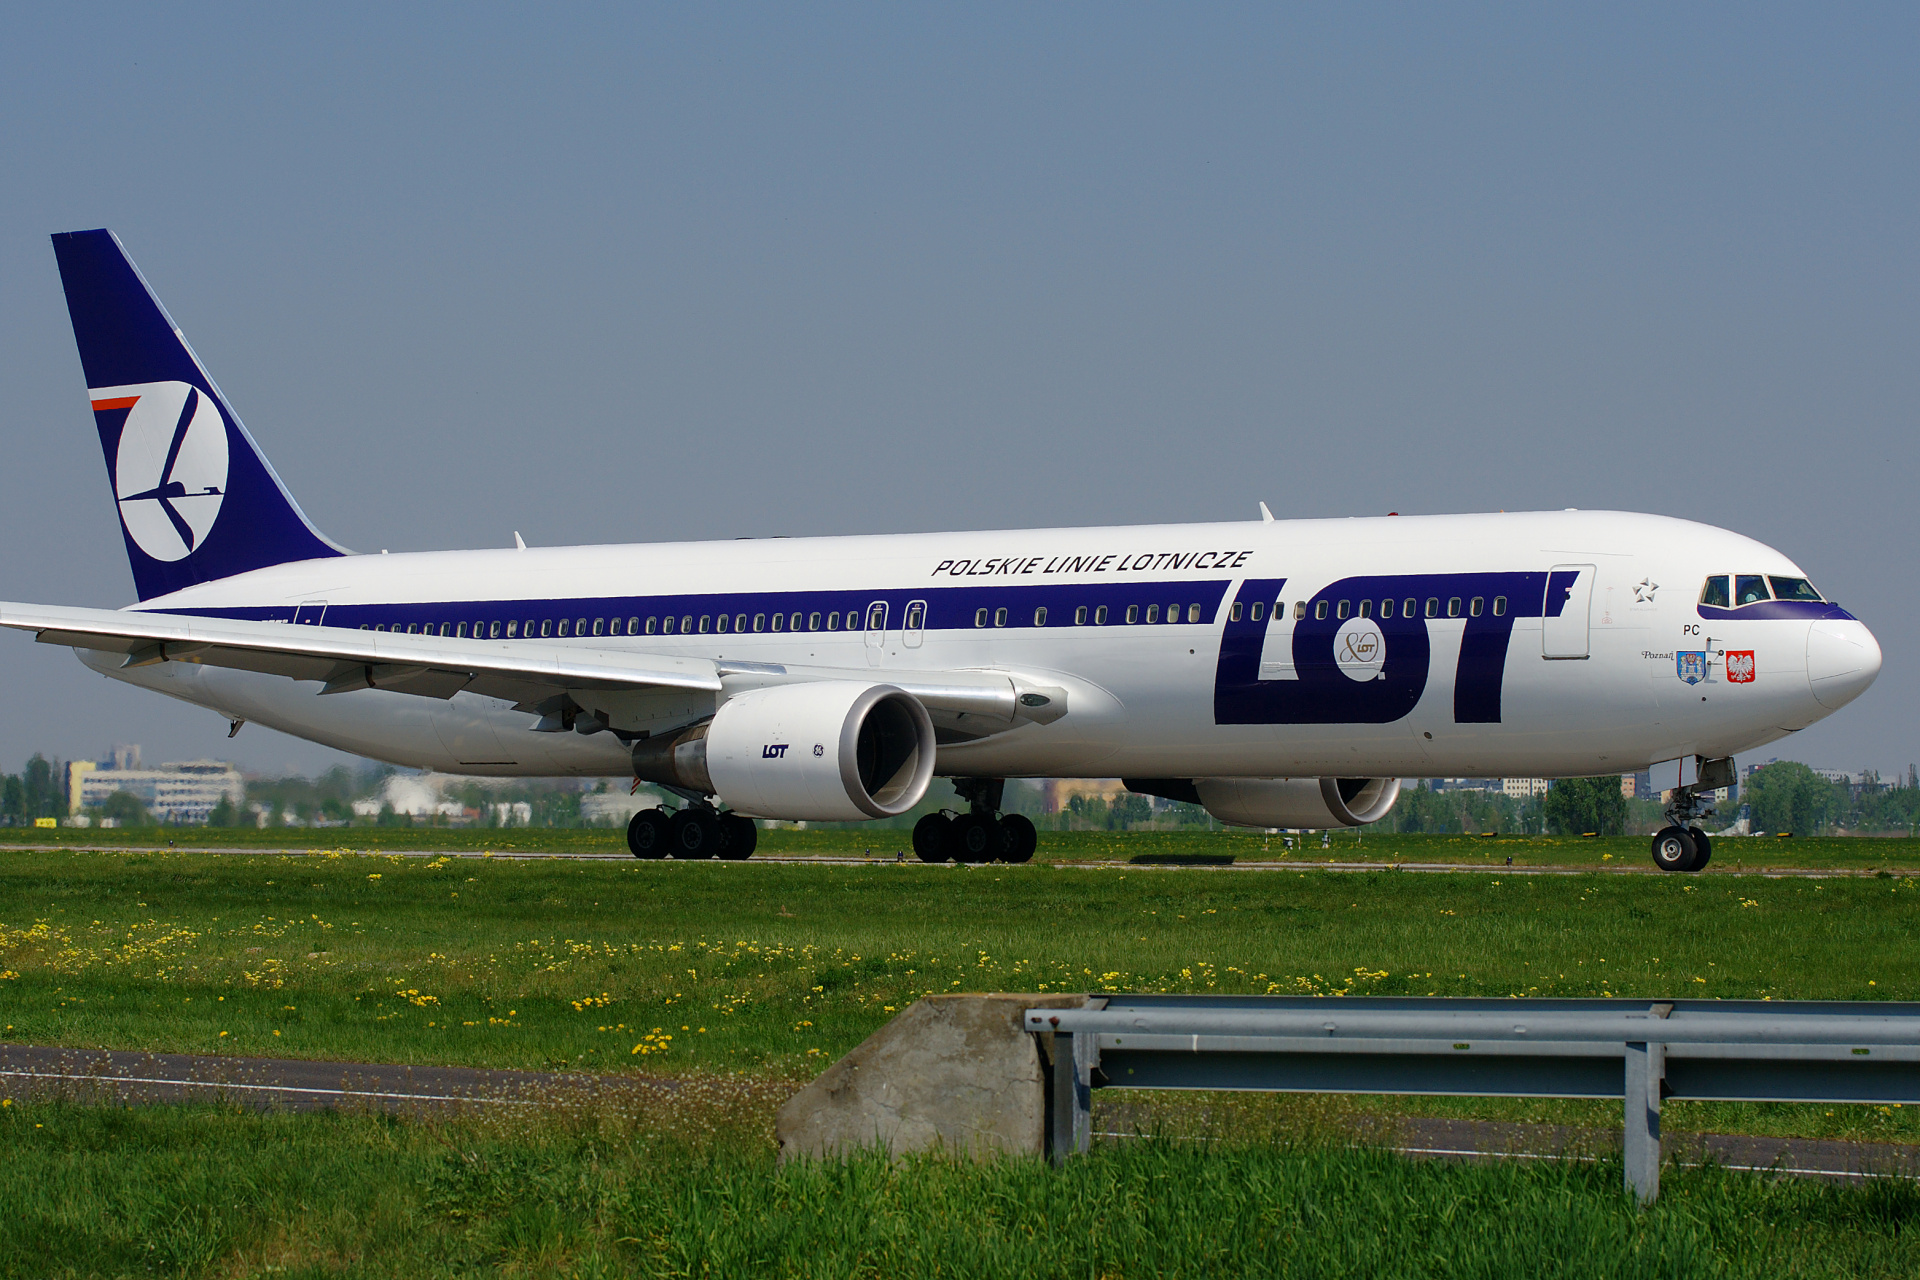 SP-LPC (80th Anniversary sticker) (Aircraft » EPWA Spotting » Boeing 767-300 » LOT Polish Airlines)